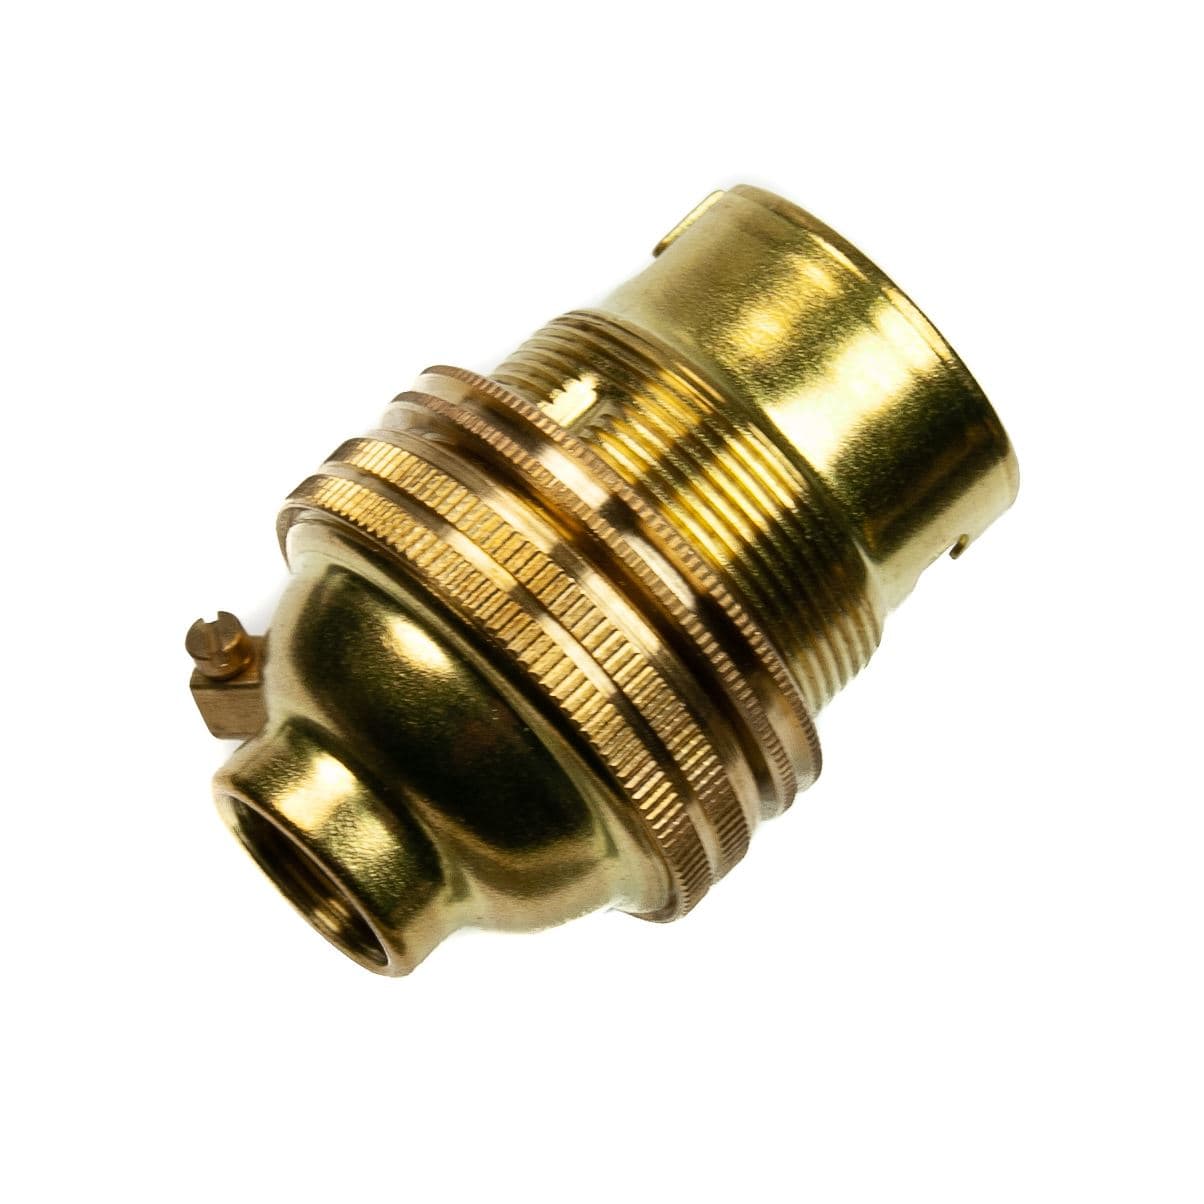 Brass Lamp Holder Bayonet Cap (BC) (B22d) Fitting Bulb Holder 1/2" Screw Thread Plain Lampholders Thunderfix 100256